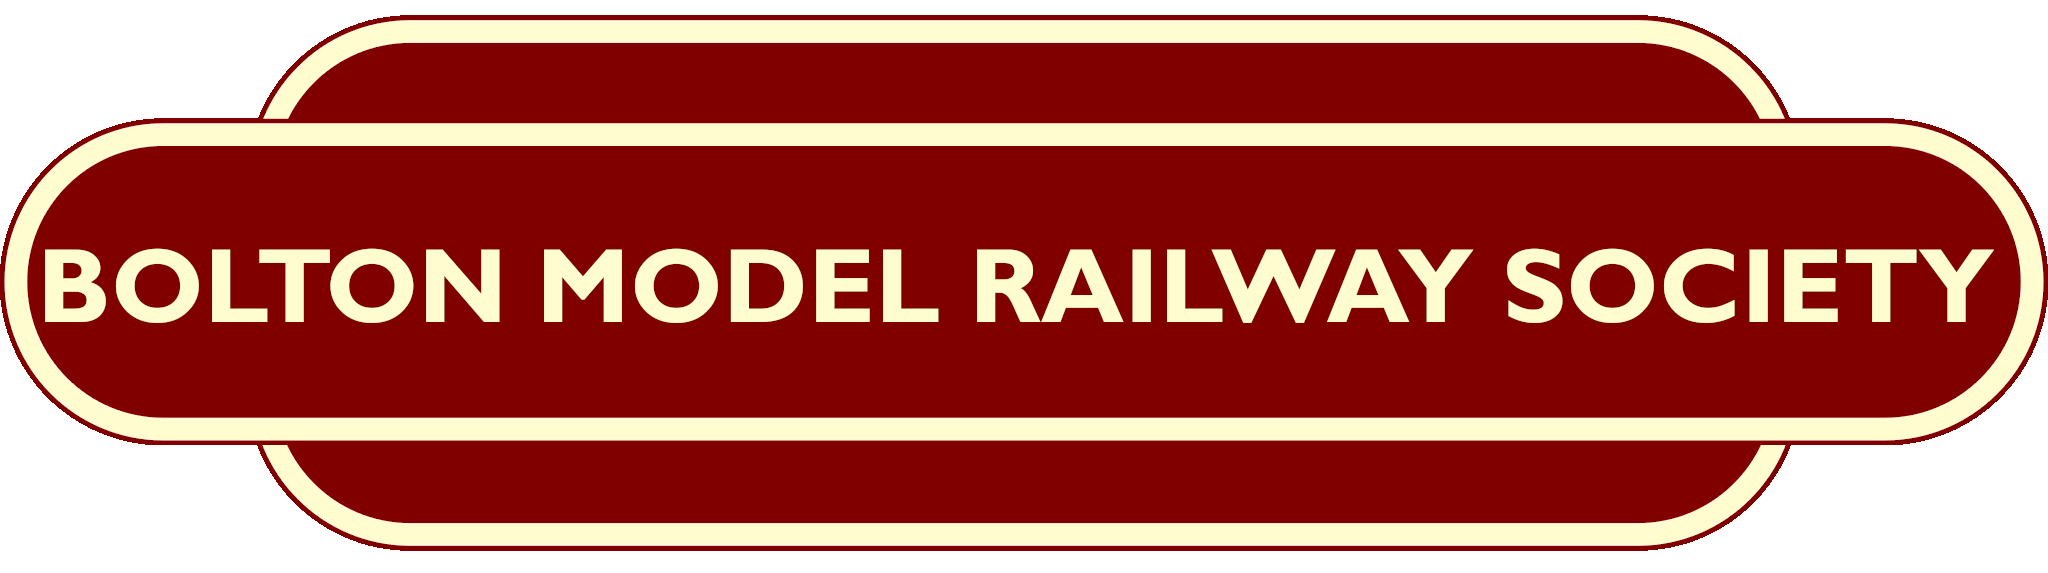 Bolton Model Railway Society